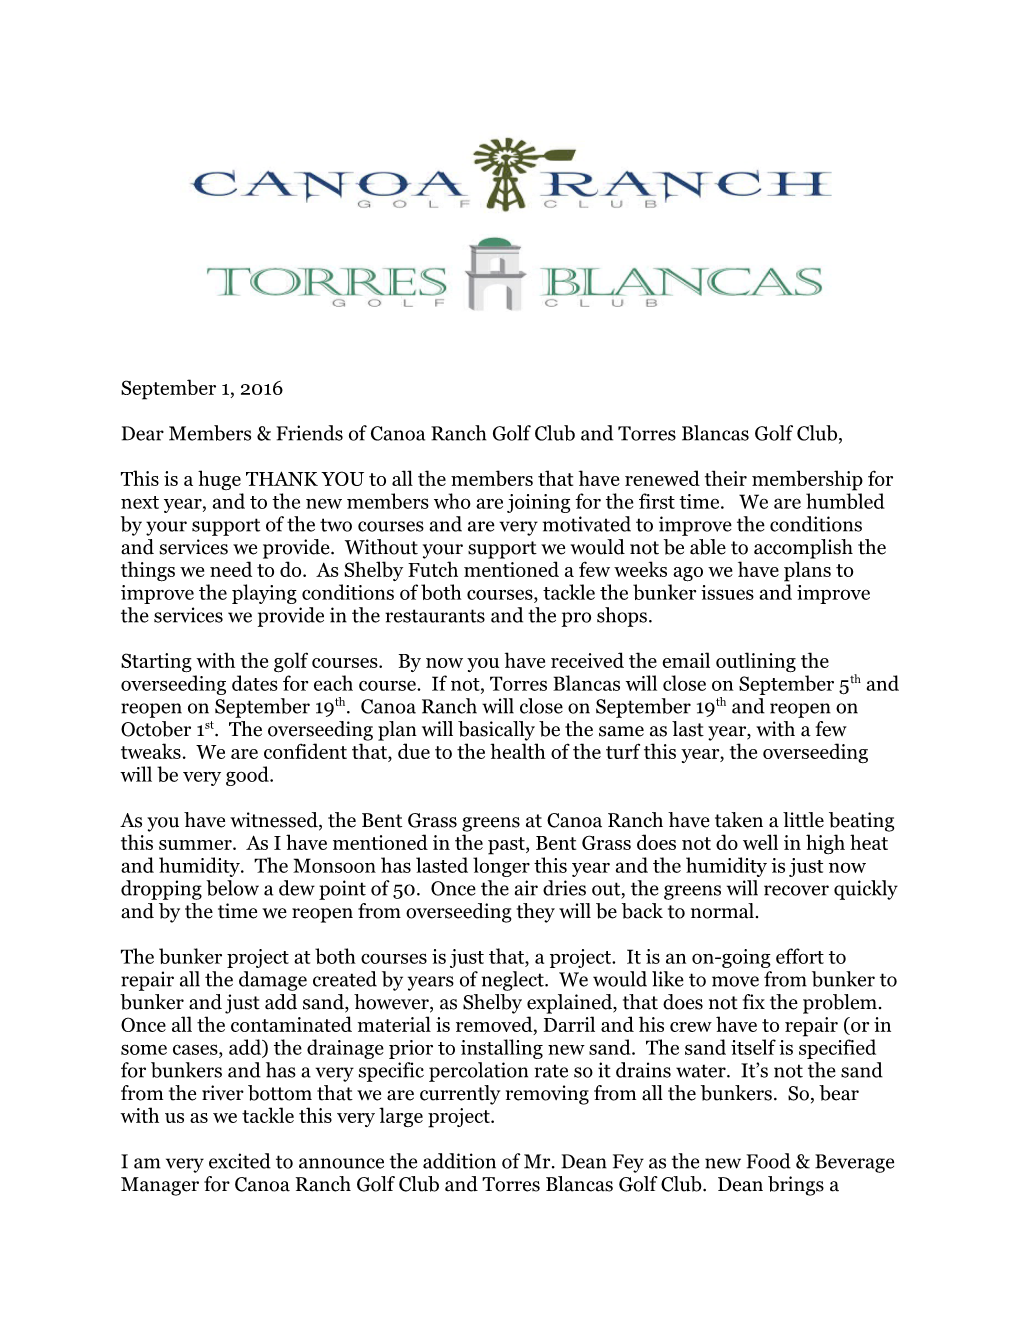 Dear Members & Friends of Canoa Ranch Golf Club and Torres Blancas Golf Club